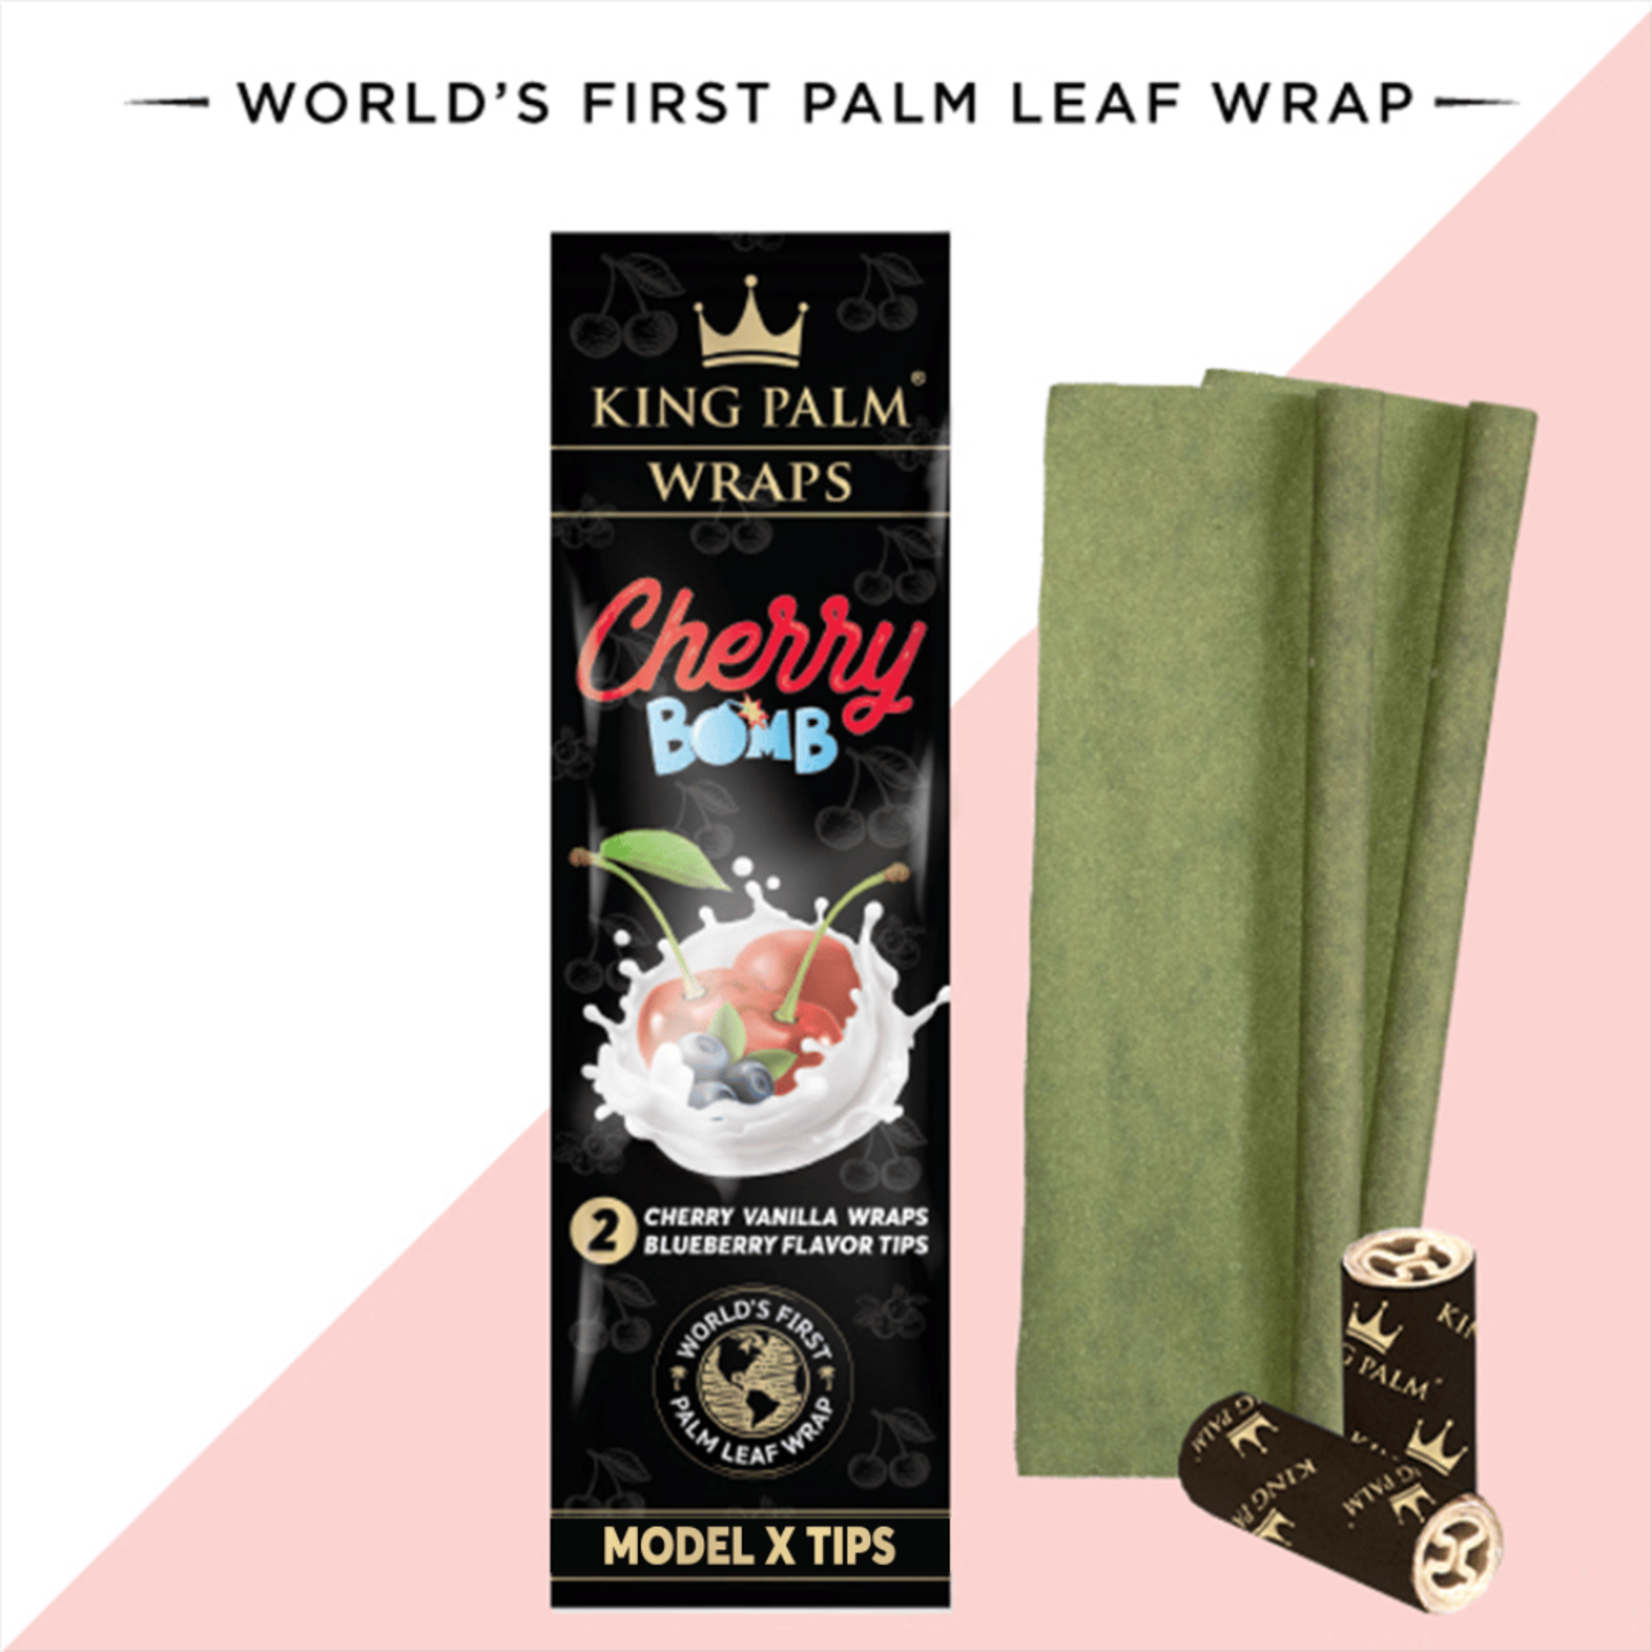 King Palm King Palm Wraps: Cherry Bomb - 2 Cherry Vanilla Wraps with Blueberry Flavor Tips